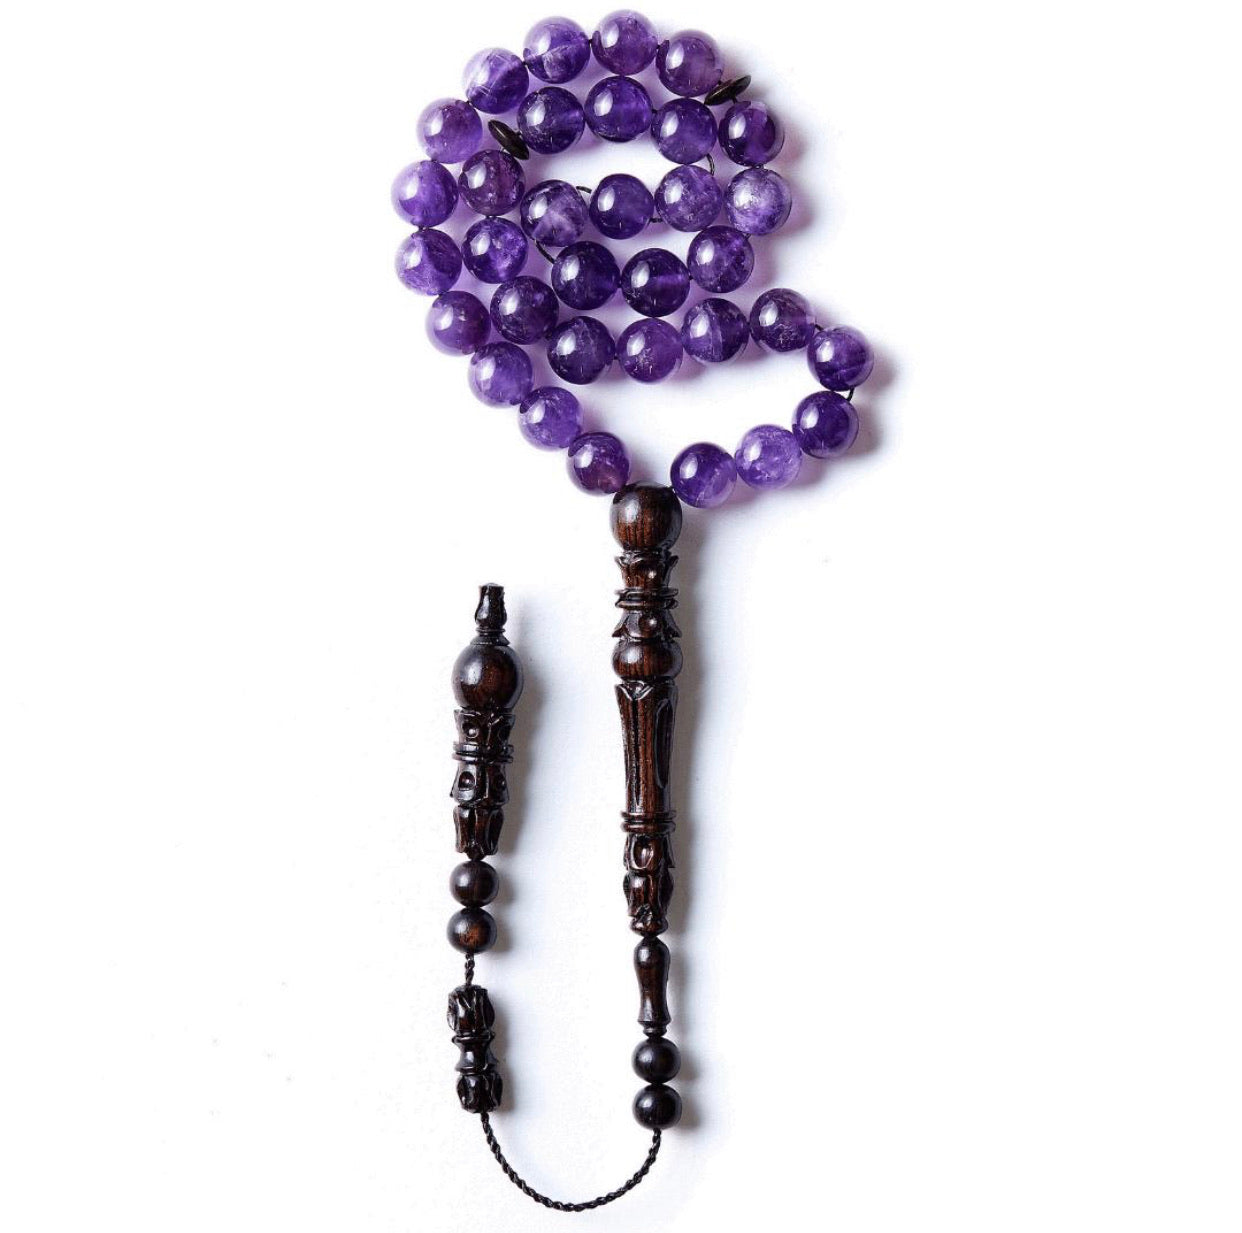 Tasbih 33 beads for prayer 100% original amethyst premium quality